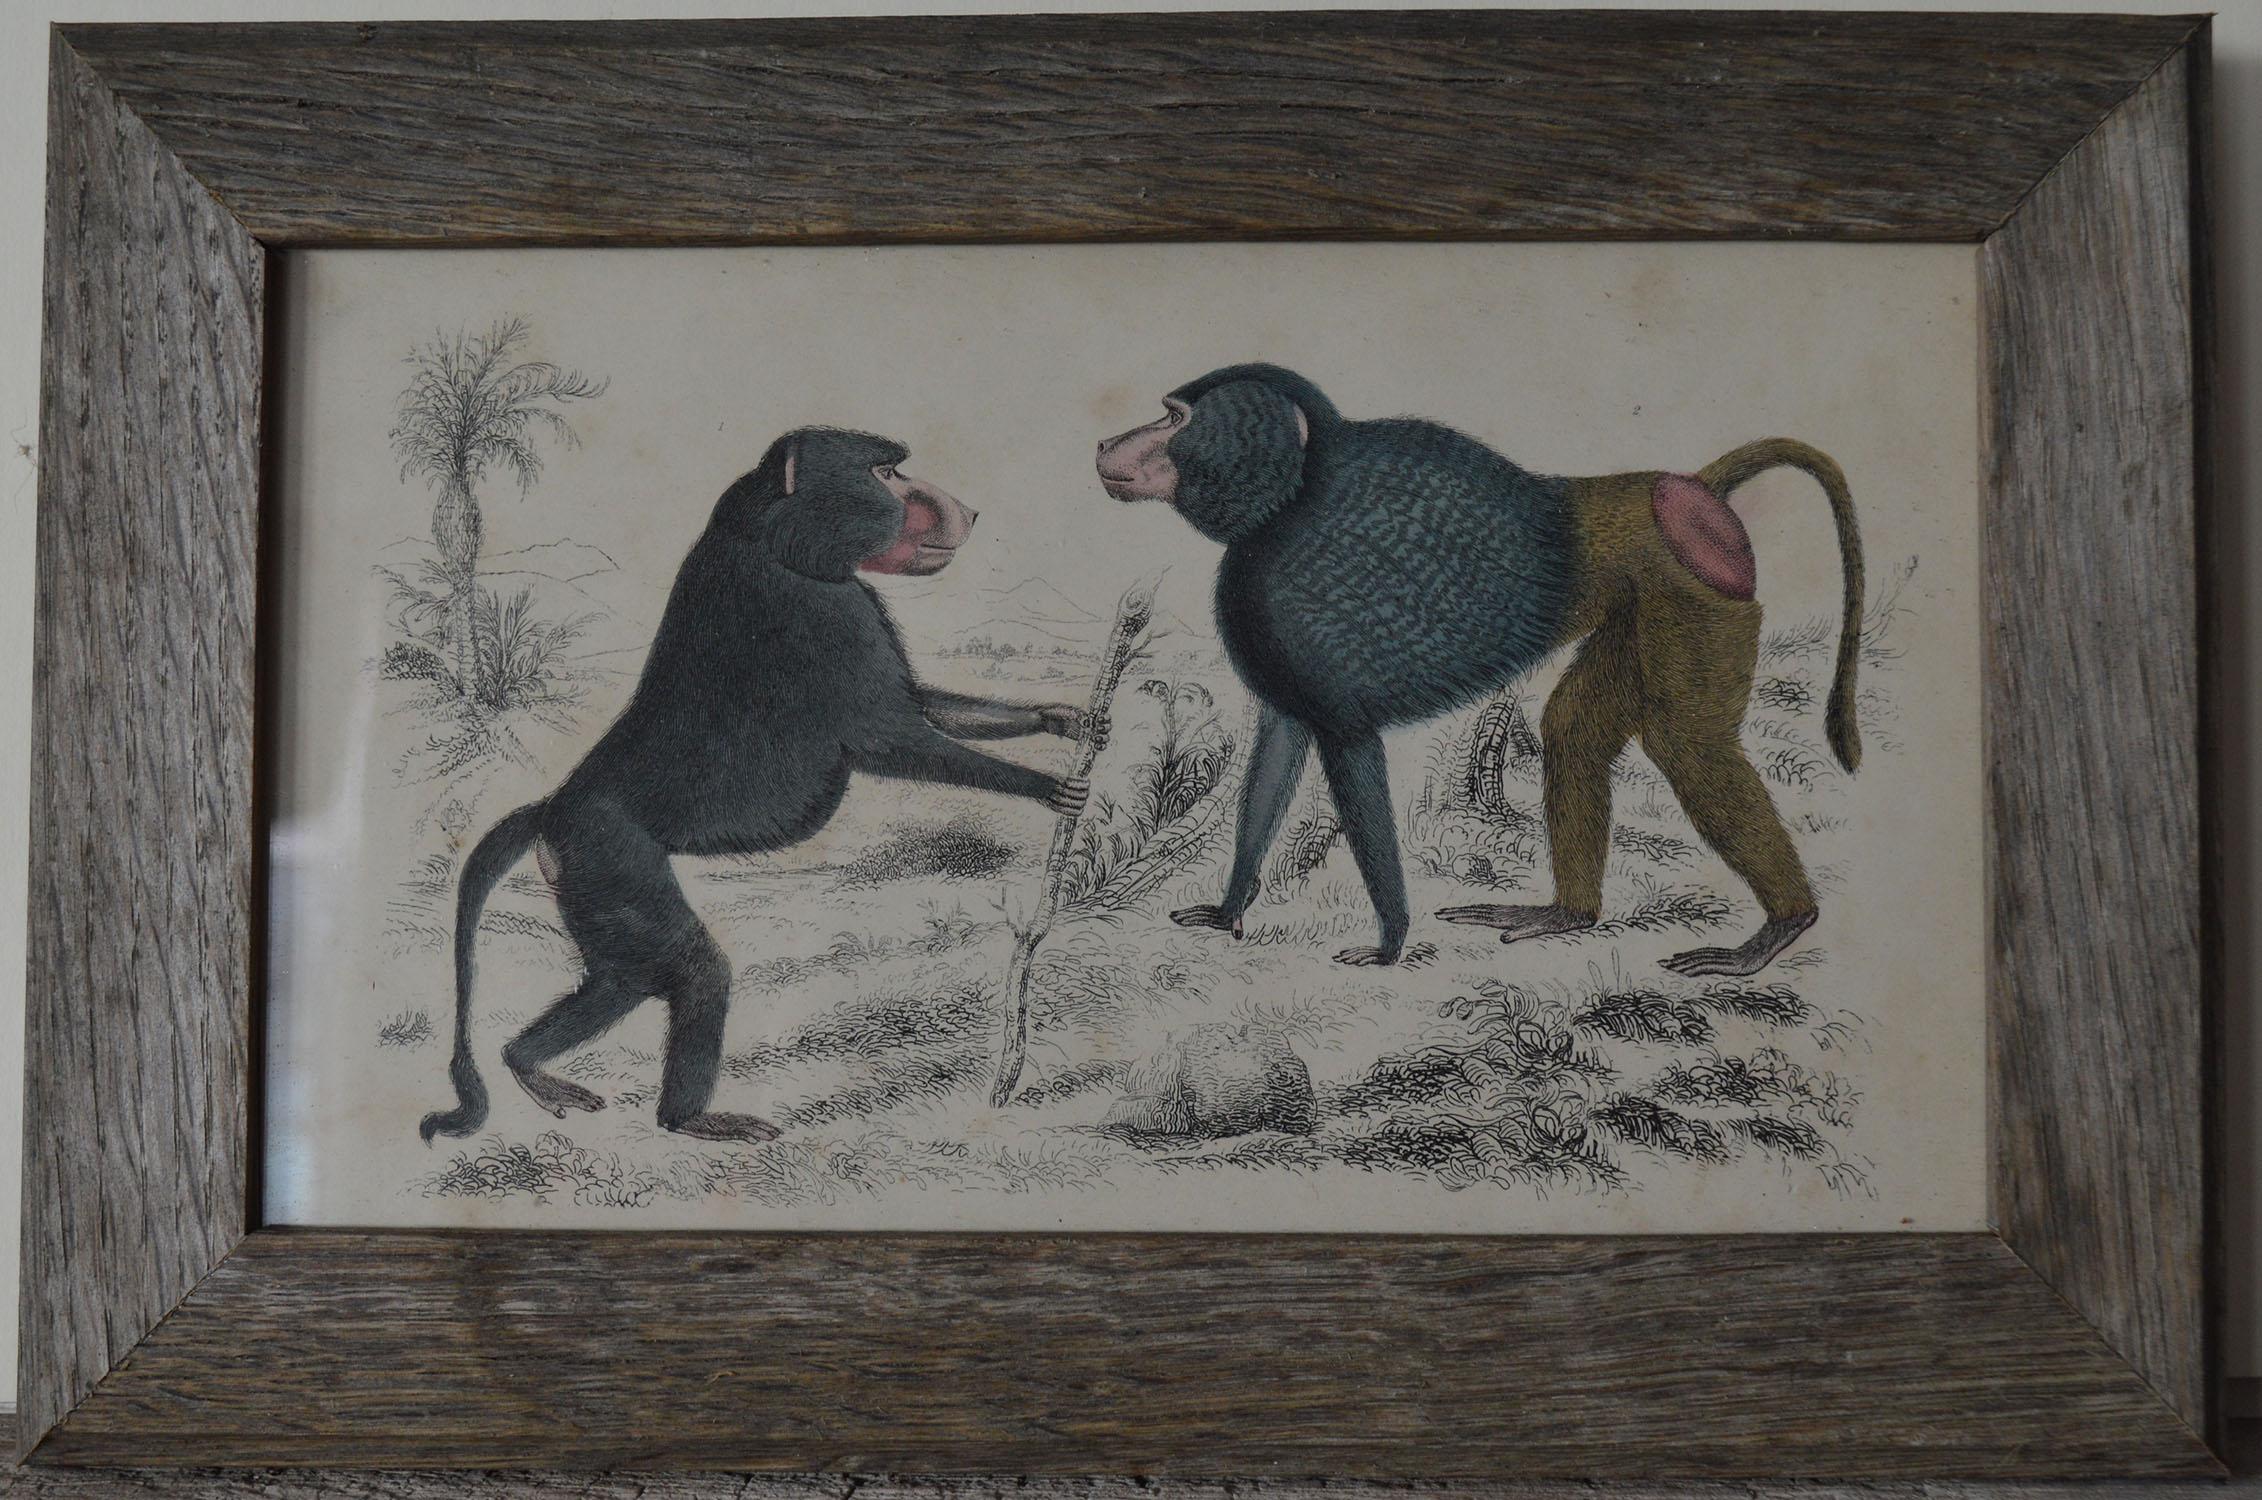 Other Original Antique Print of Monkeys, 1847